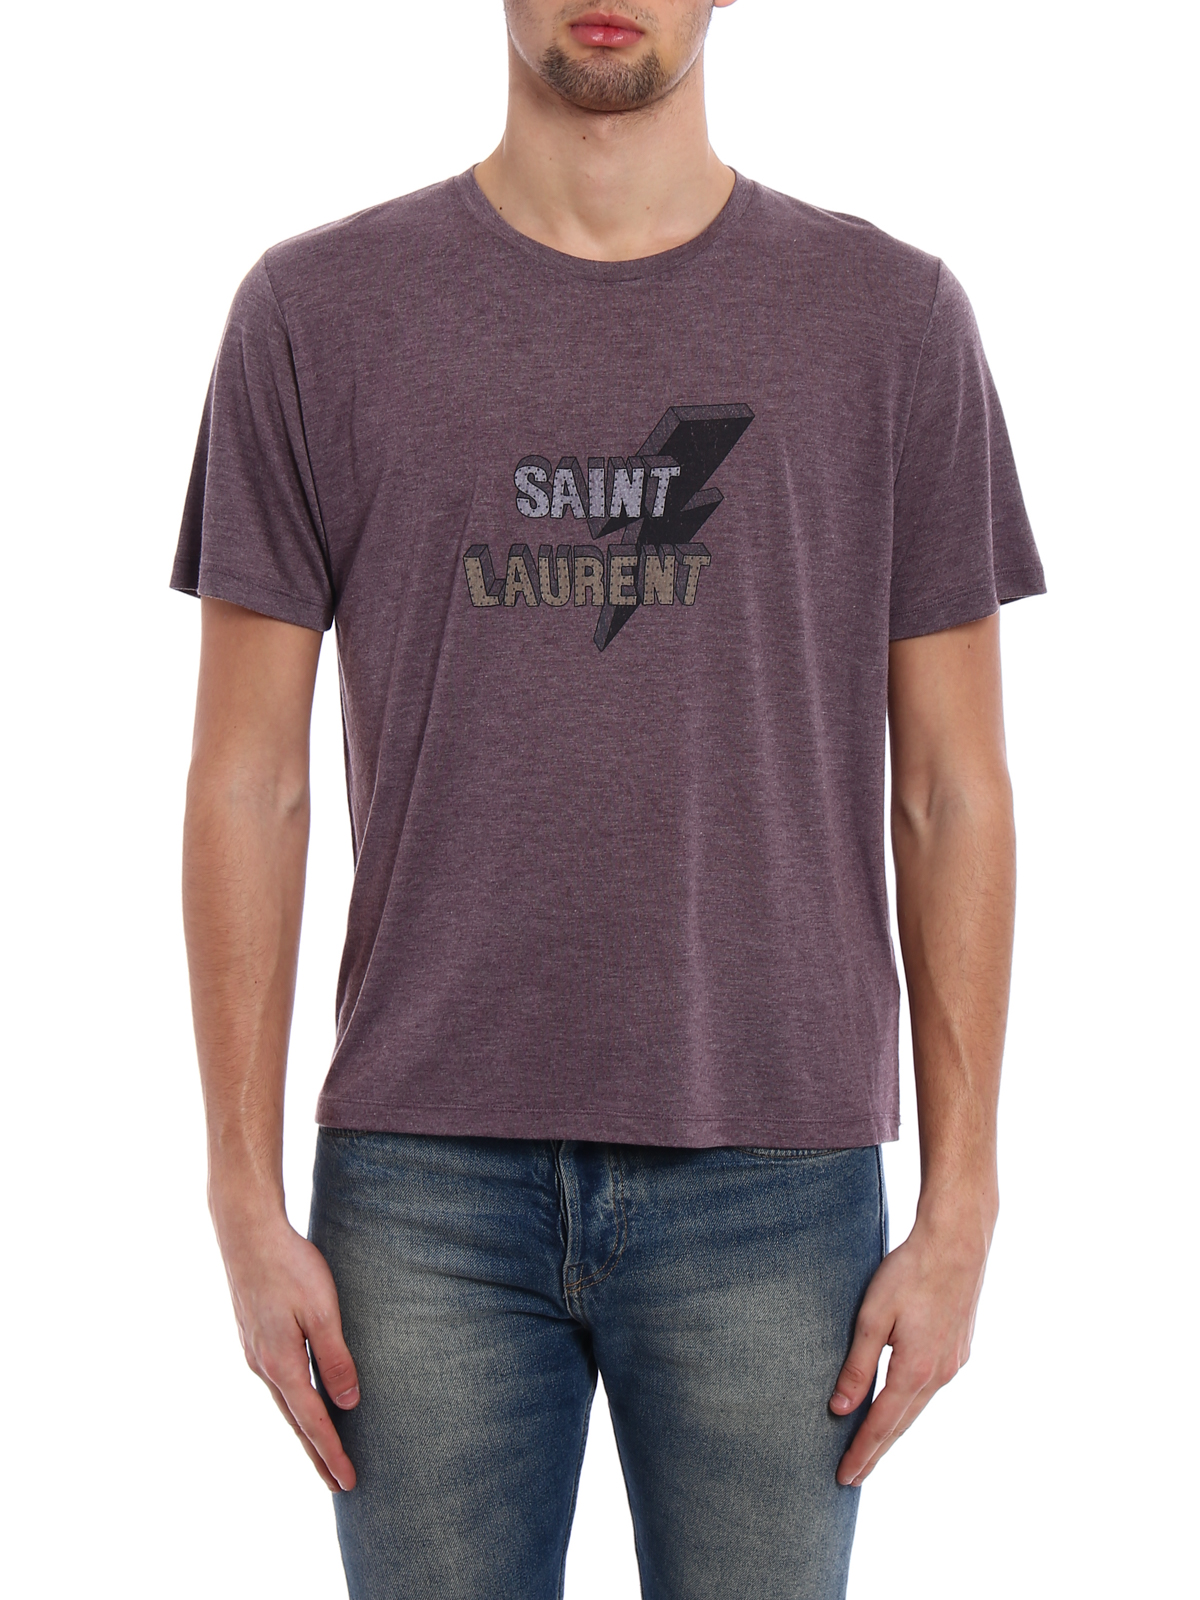 Buy > saint laurent sweatshirt lightning bolt > in stock